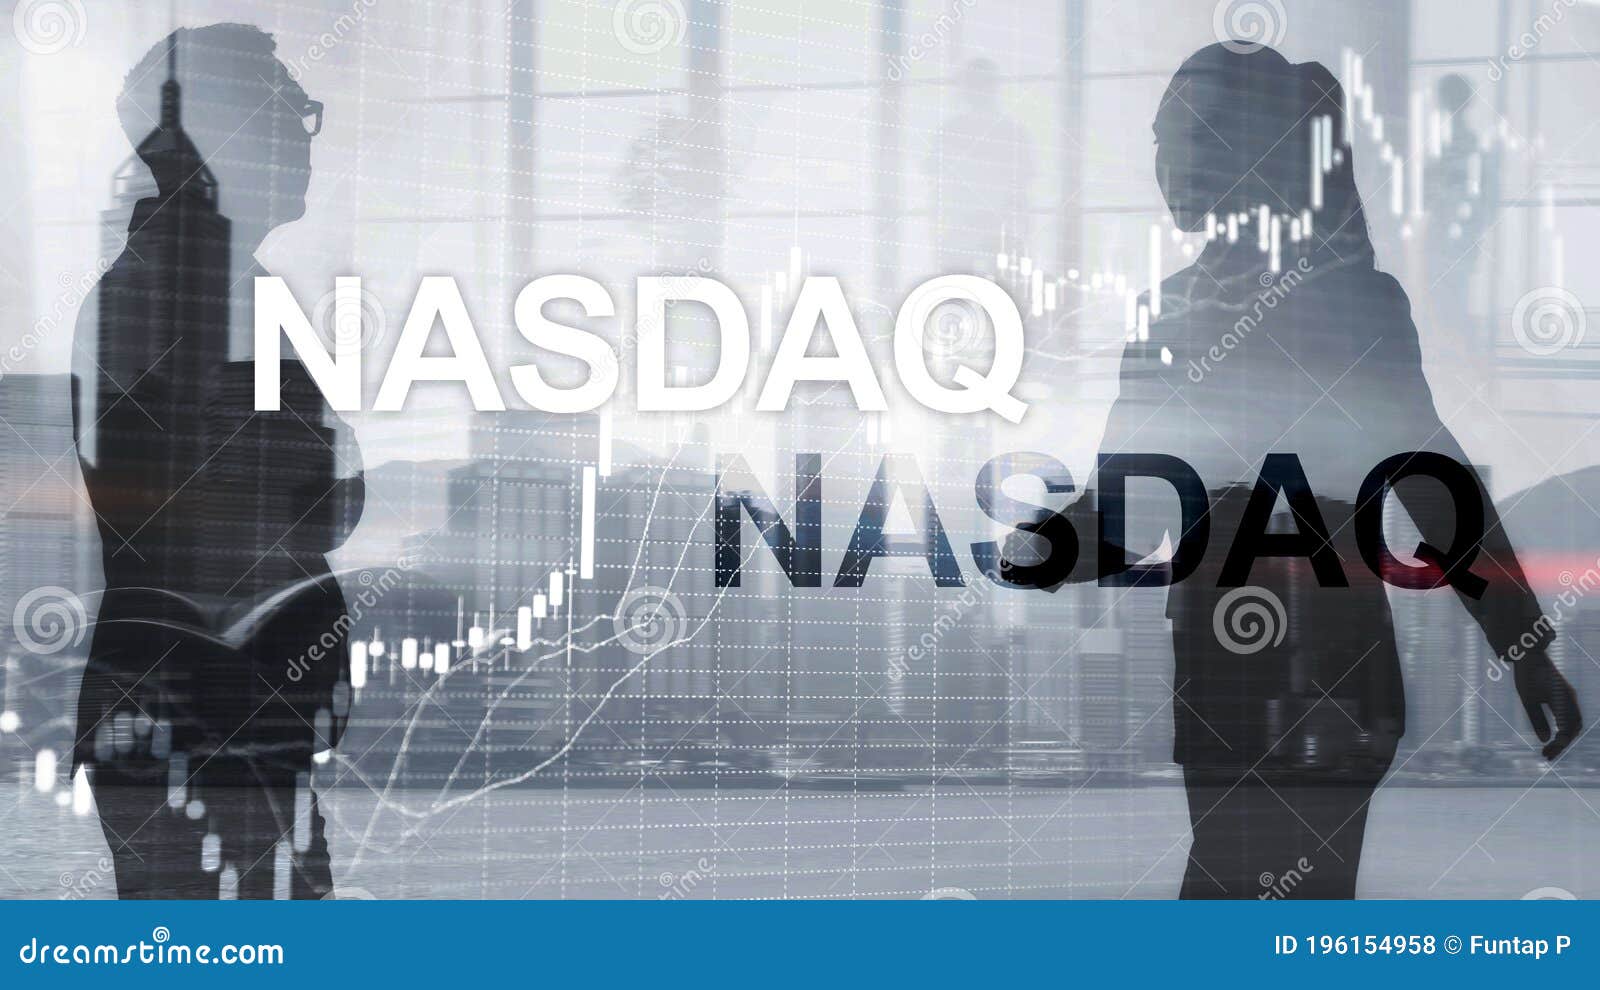 nasdaq stock market finance concept. market crisis.